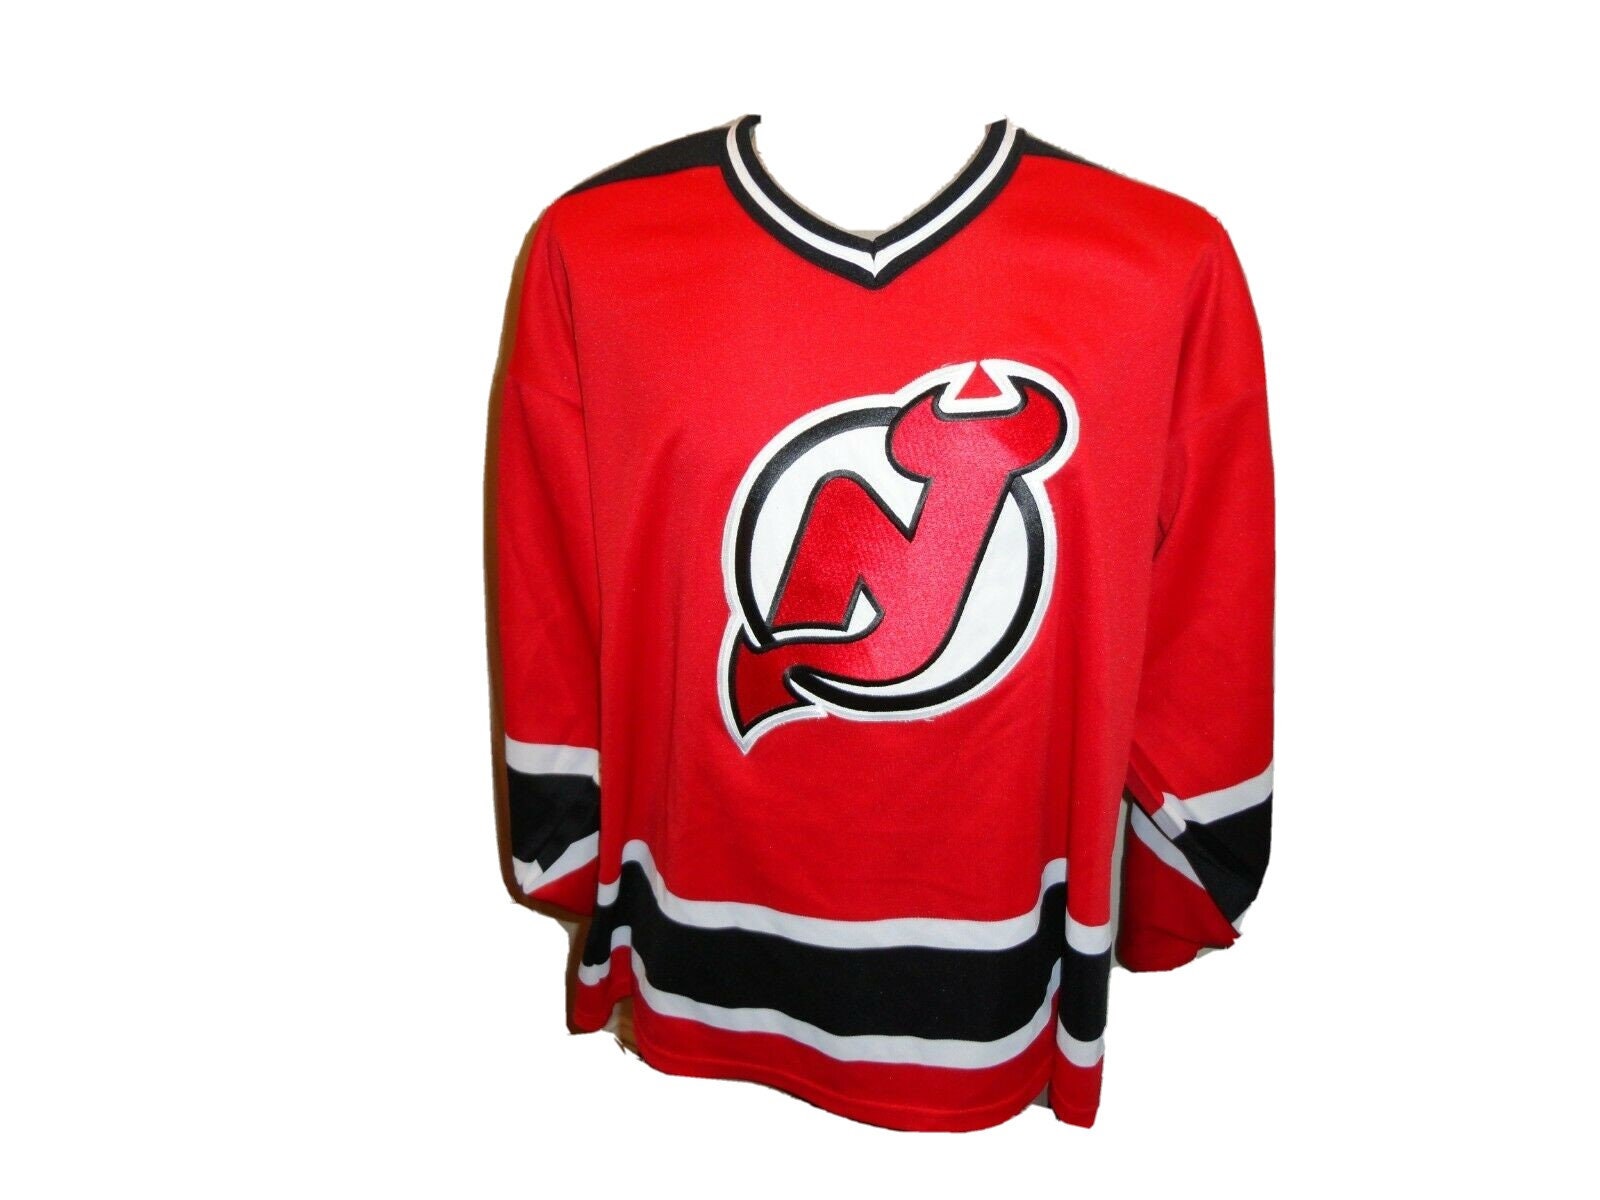 REEBOK CCM MENS New Jersey Devils Hockey Jersey NHL Red White Size